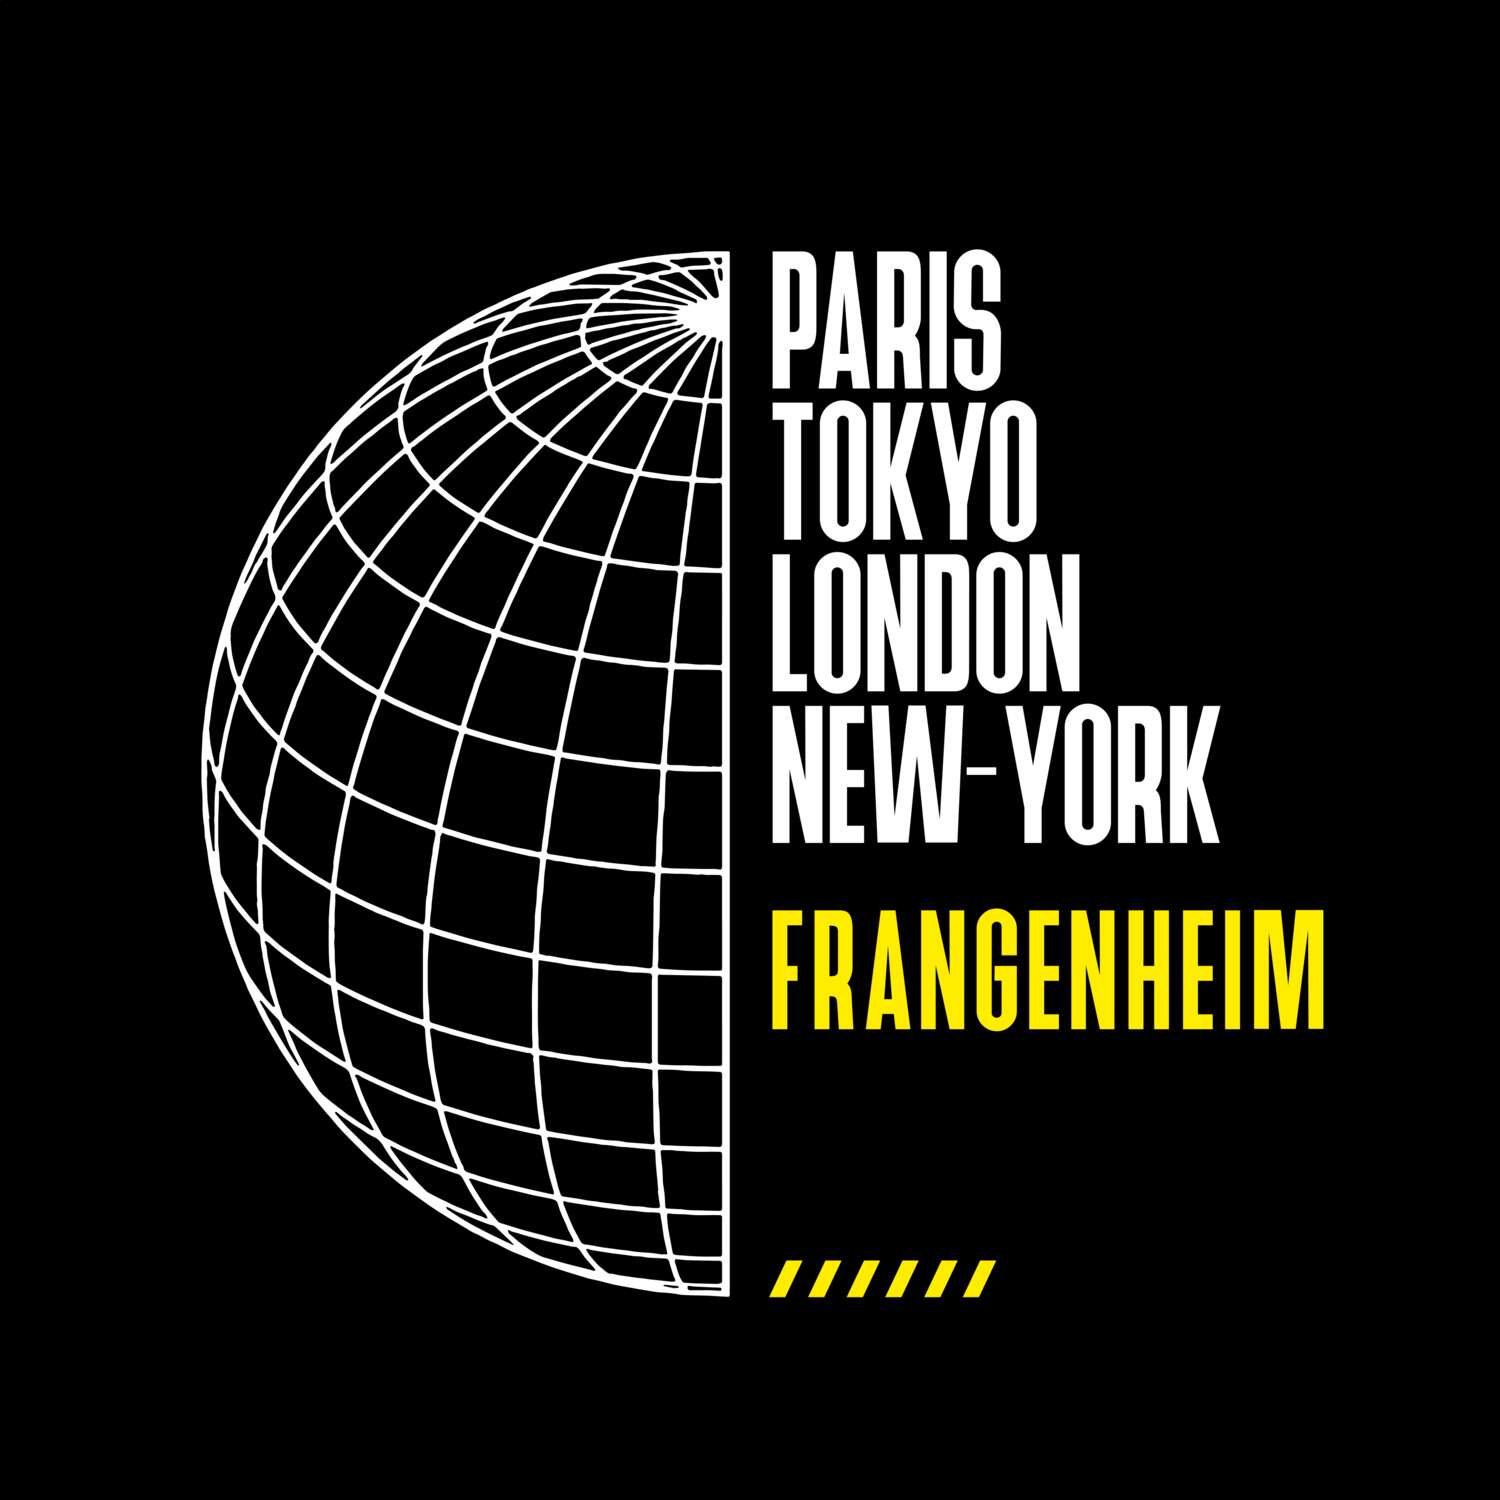 Frangenheim T-Shirt »Paris Tokyo London«